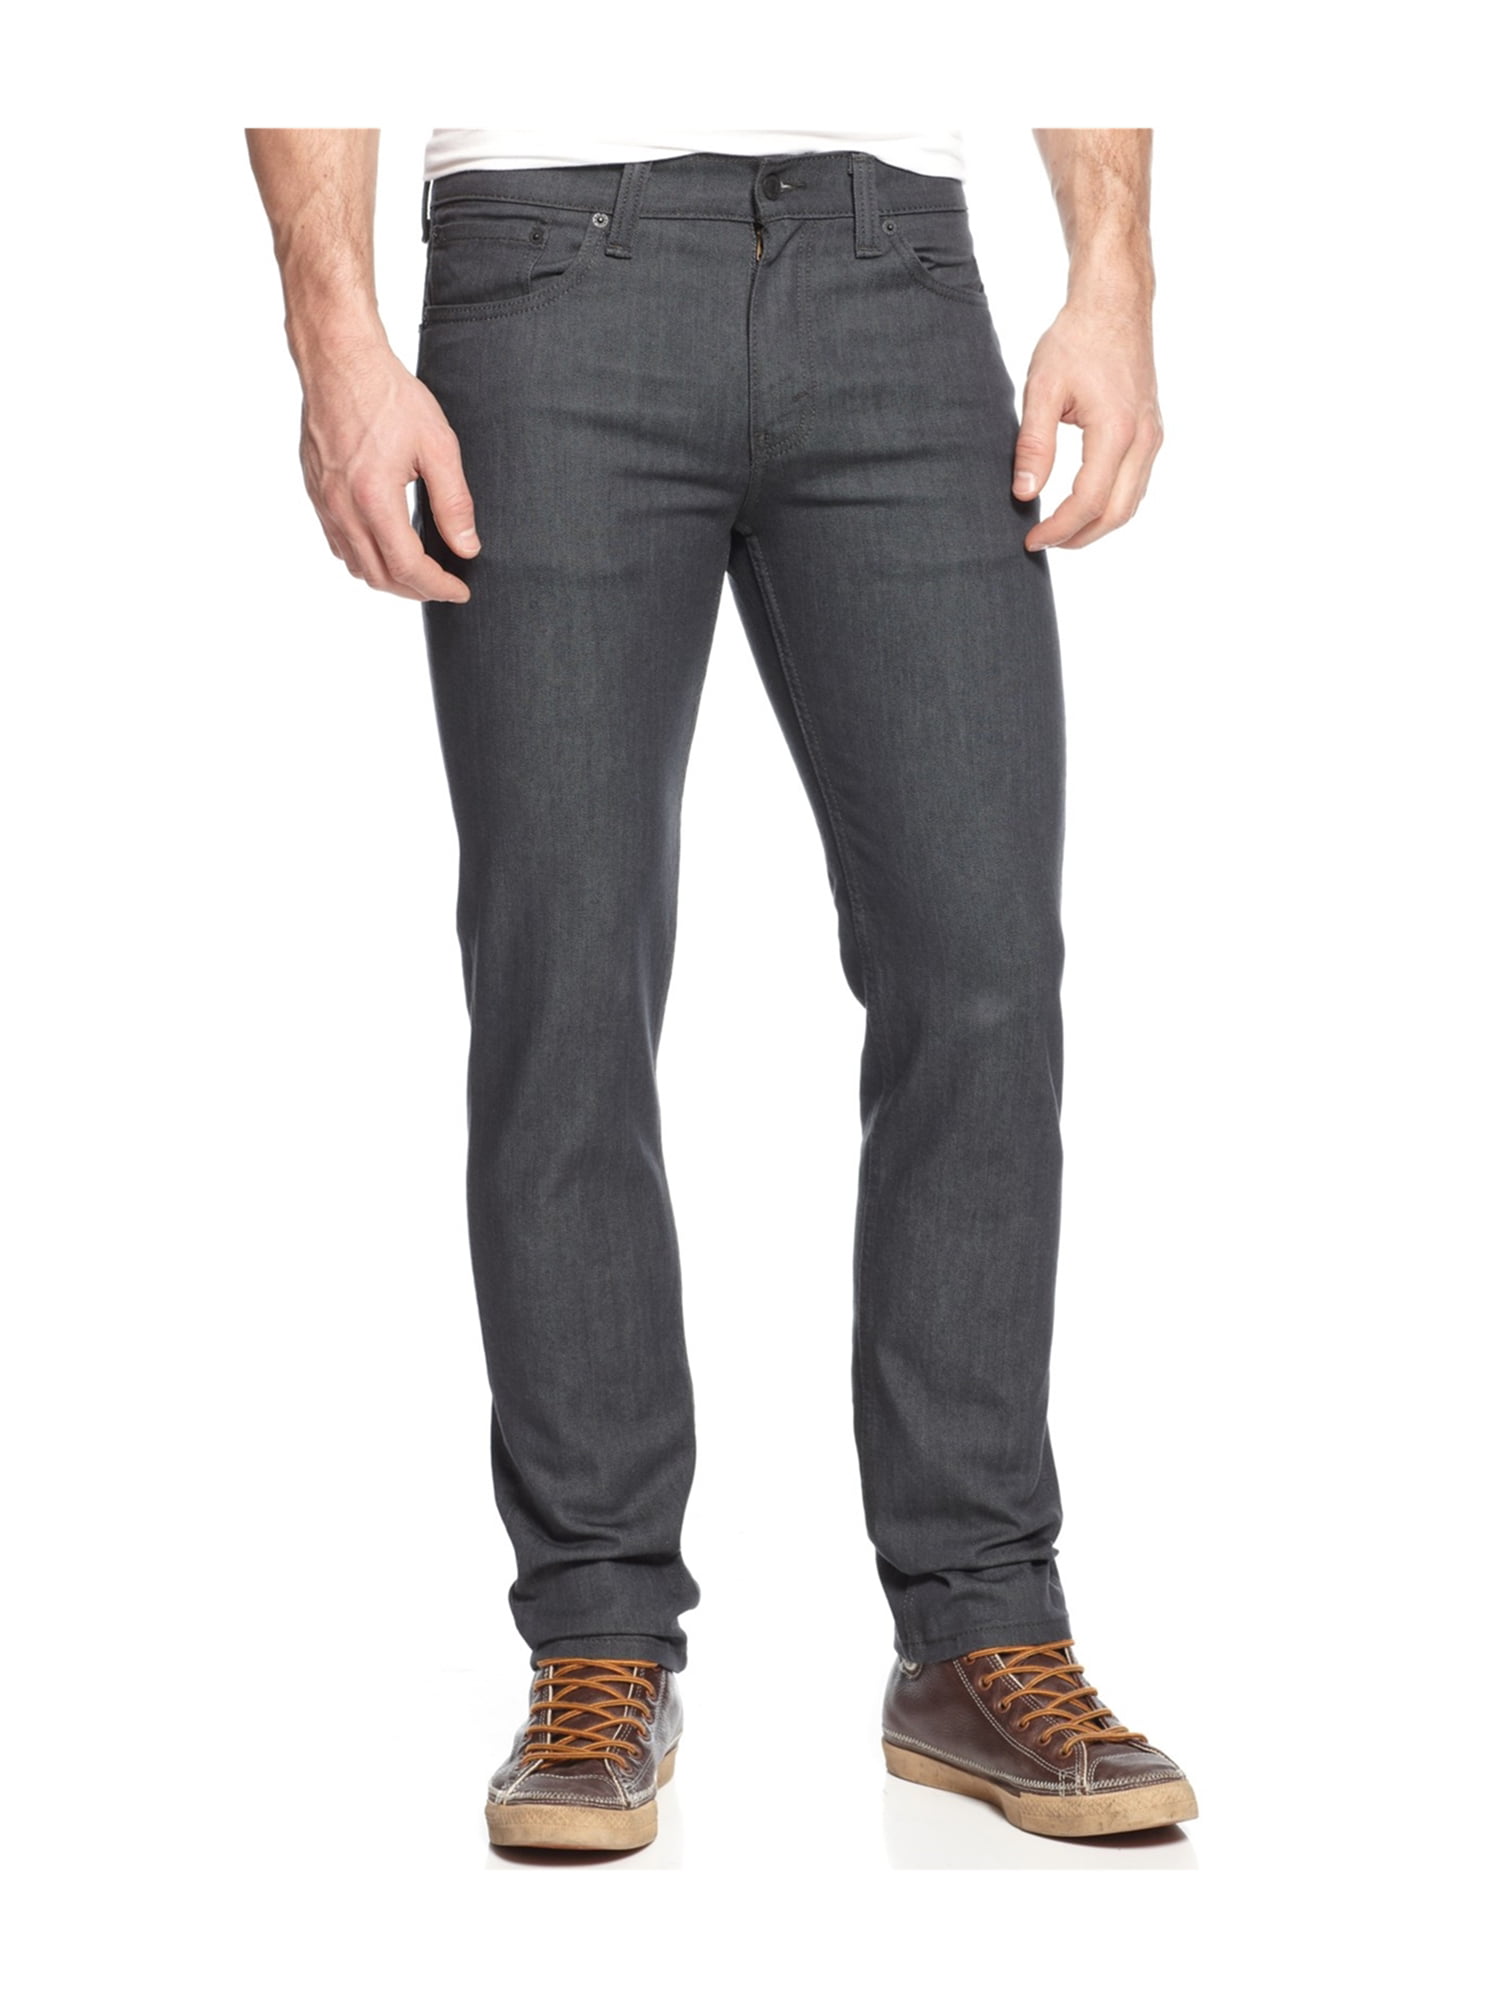 Levi's Mens 511 Dark Slim Fit Jeans rigidgrey 36x29 | Walmart Canada